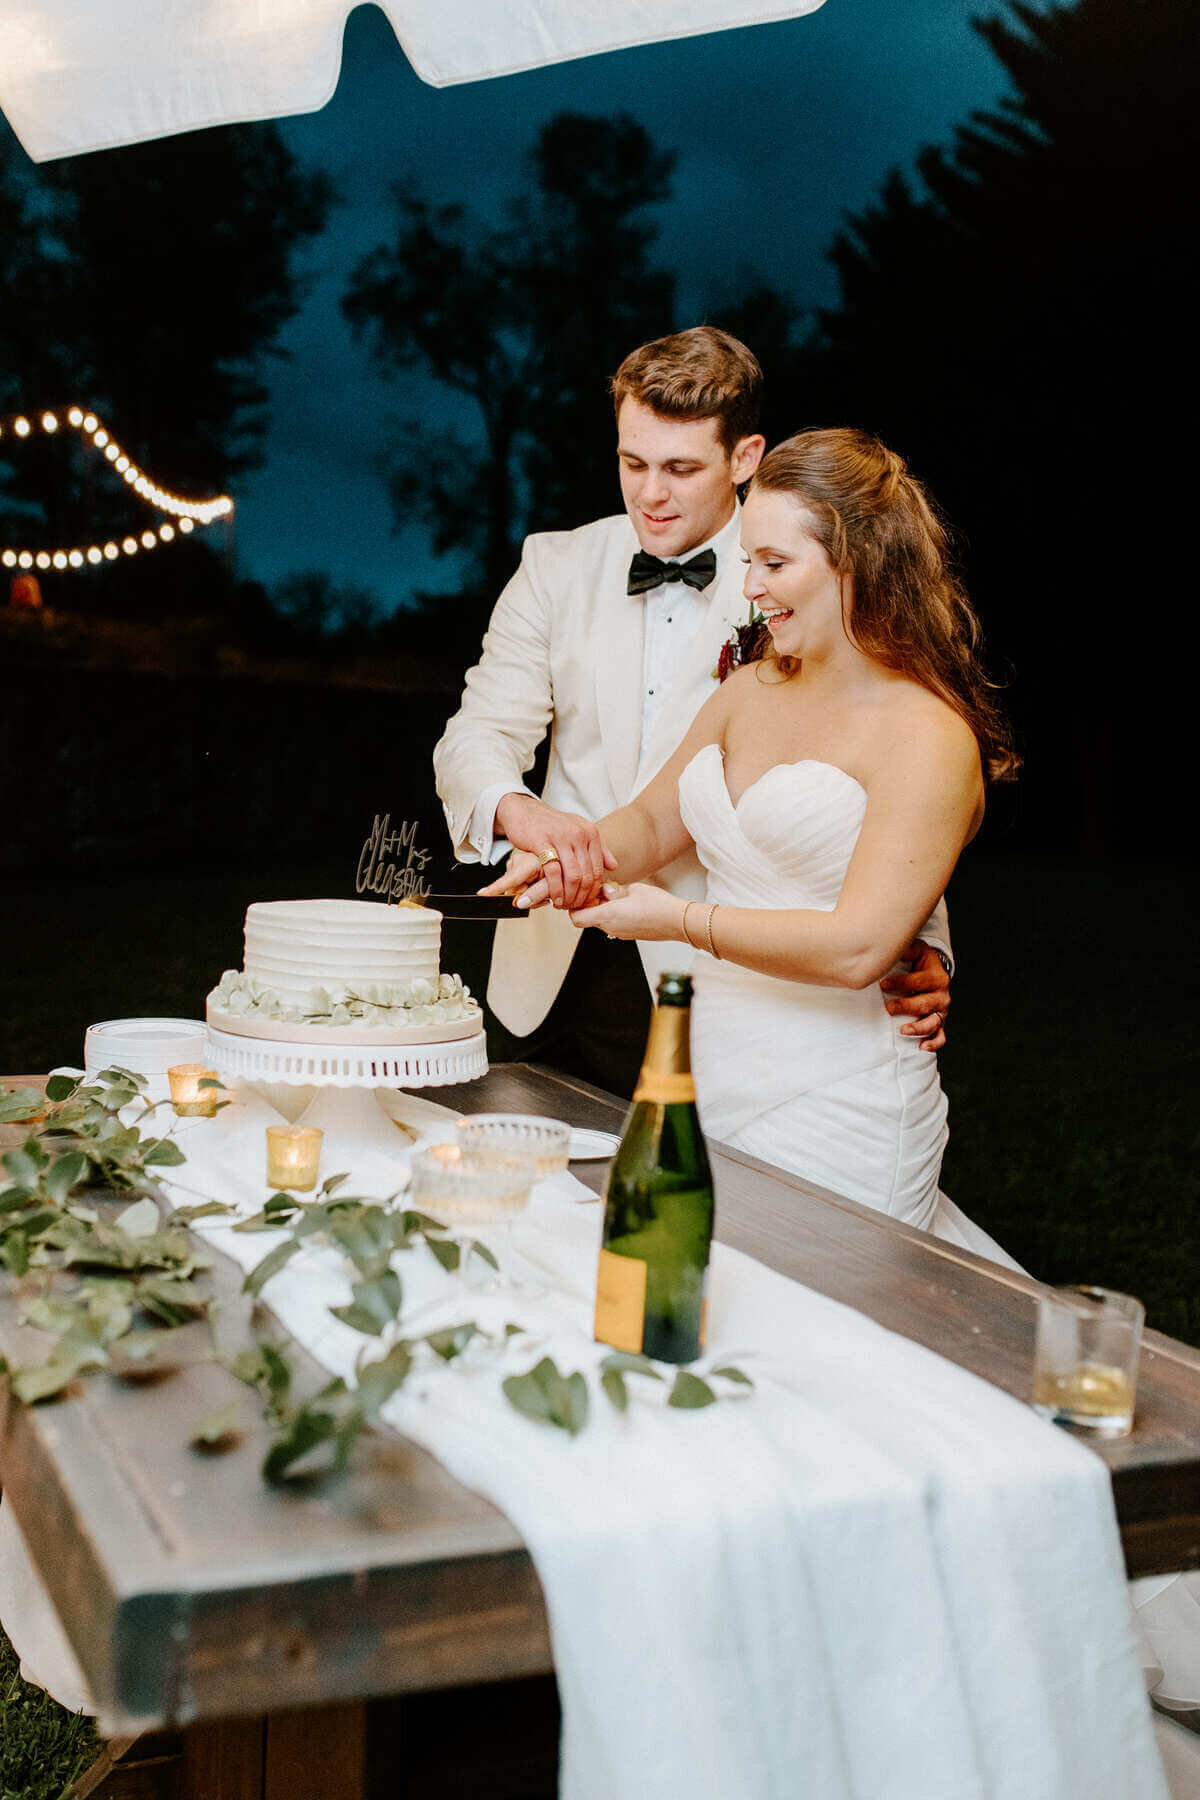 31-kara-loryn-photography-wedding-cake-cutting